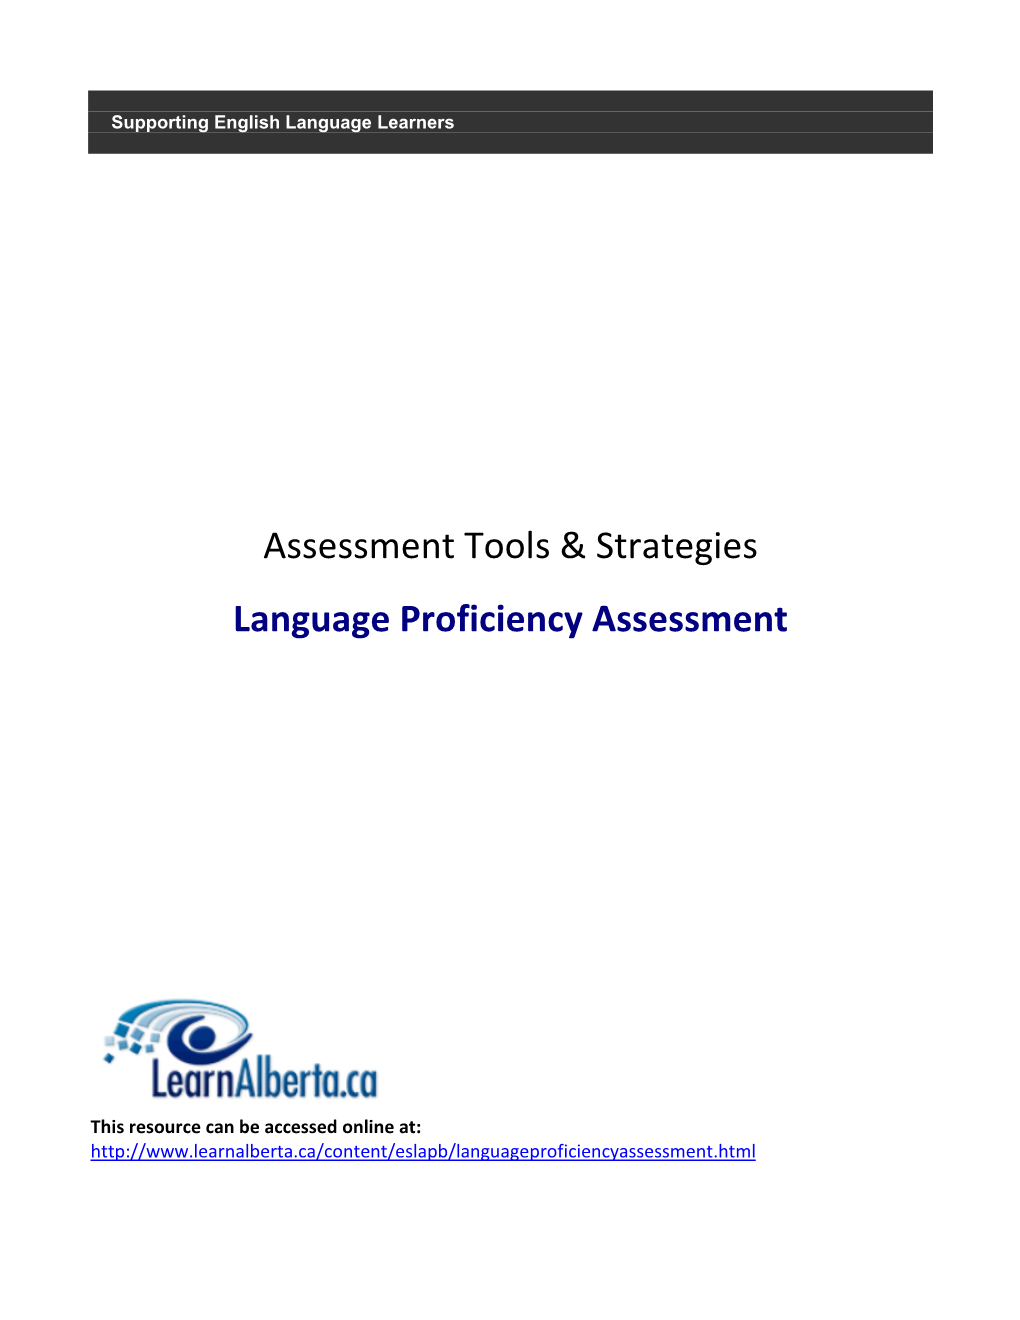 Assessment Tools & Strategies Language Proficiency Assessment